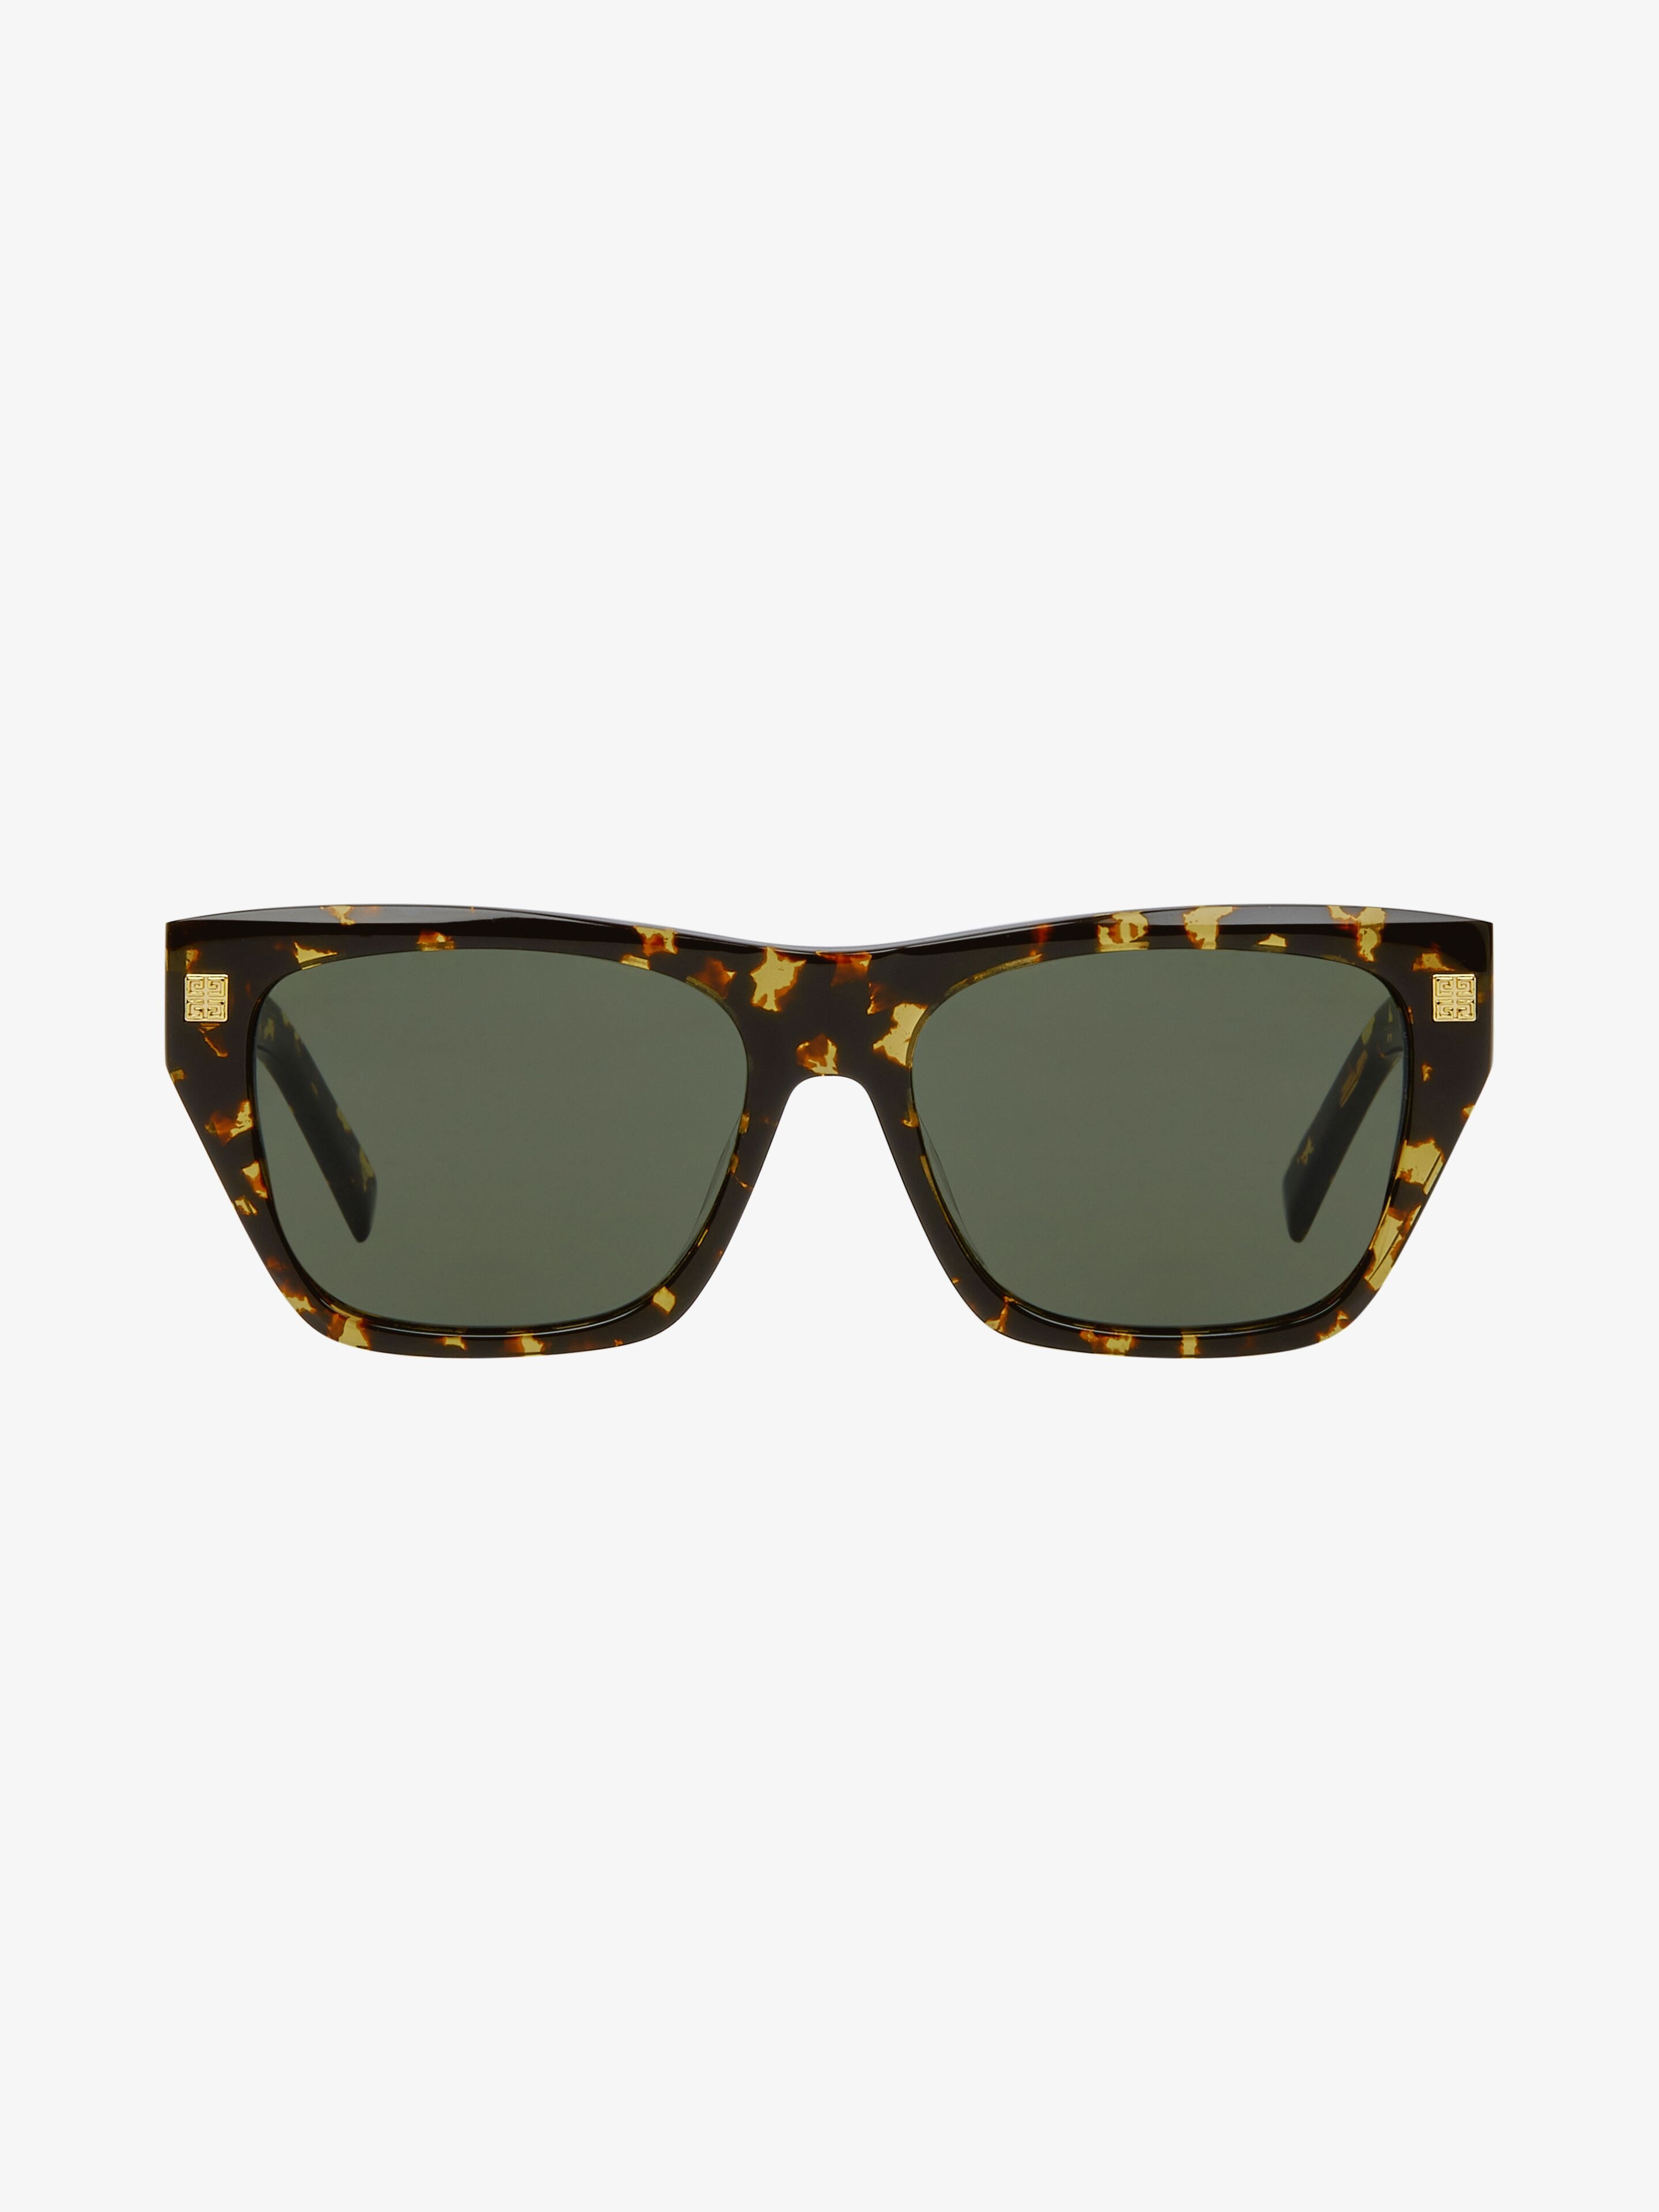 Givenchy 4gem Rimless Shield Sunglasses - Matte Black